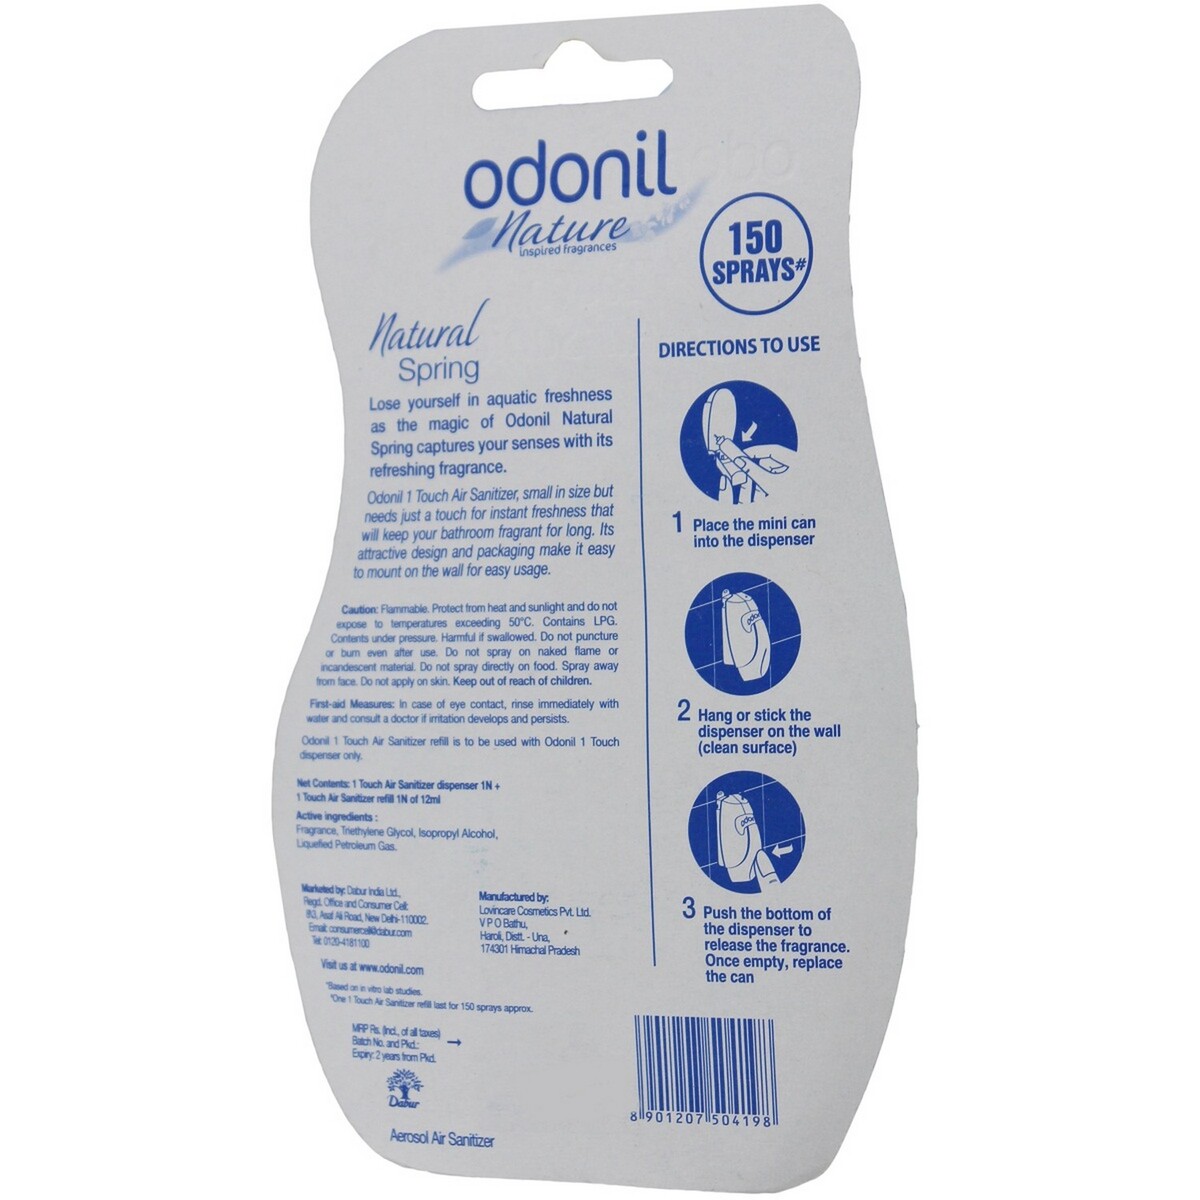 Odonil 1 Touch Air Sanitizer Dispenser Natural Spring 1's